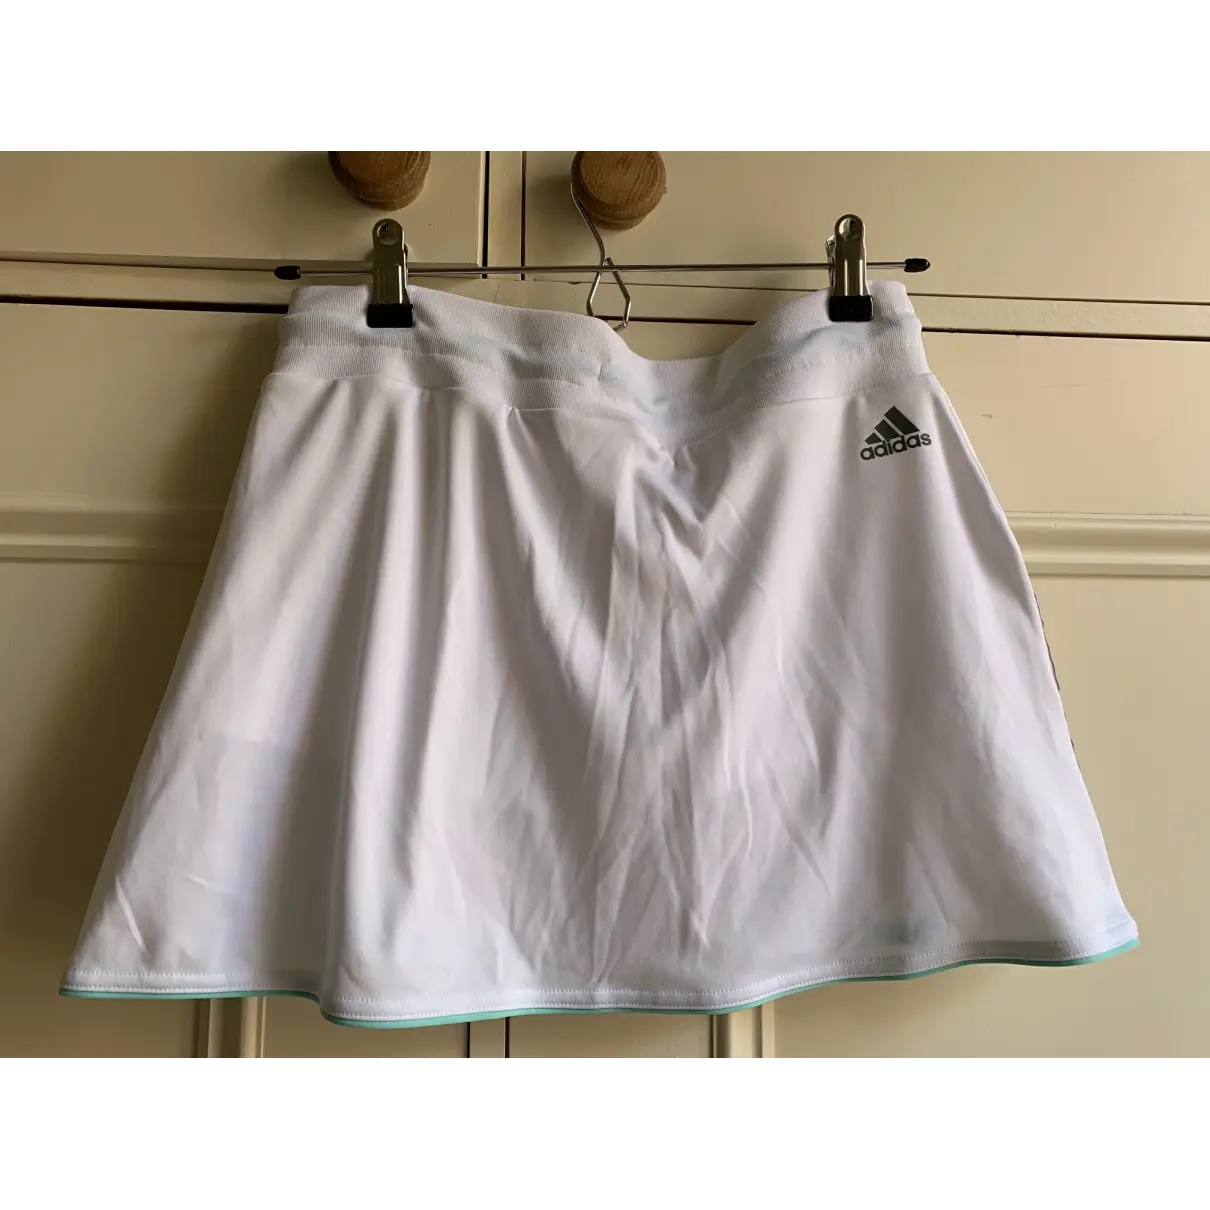 Adidas Mini skirt for sale